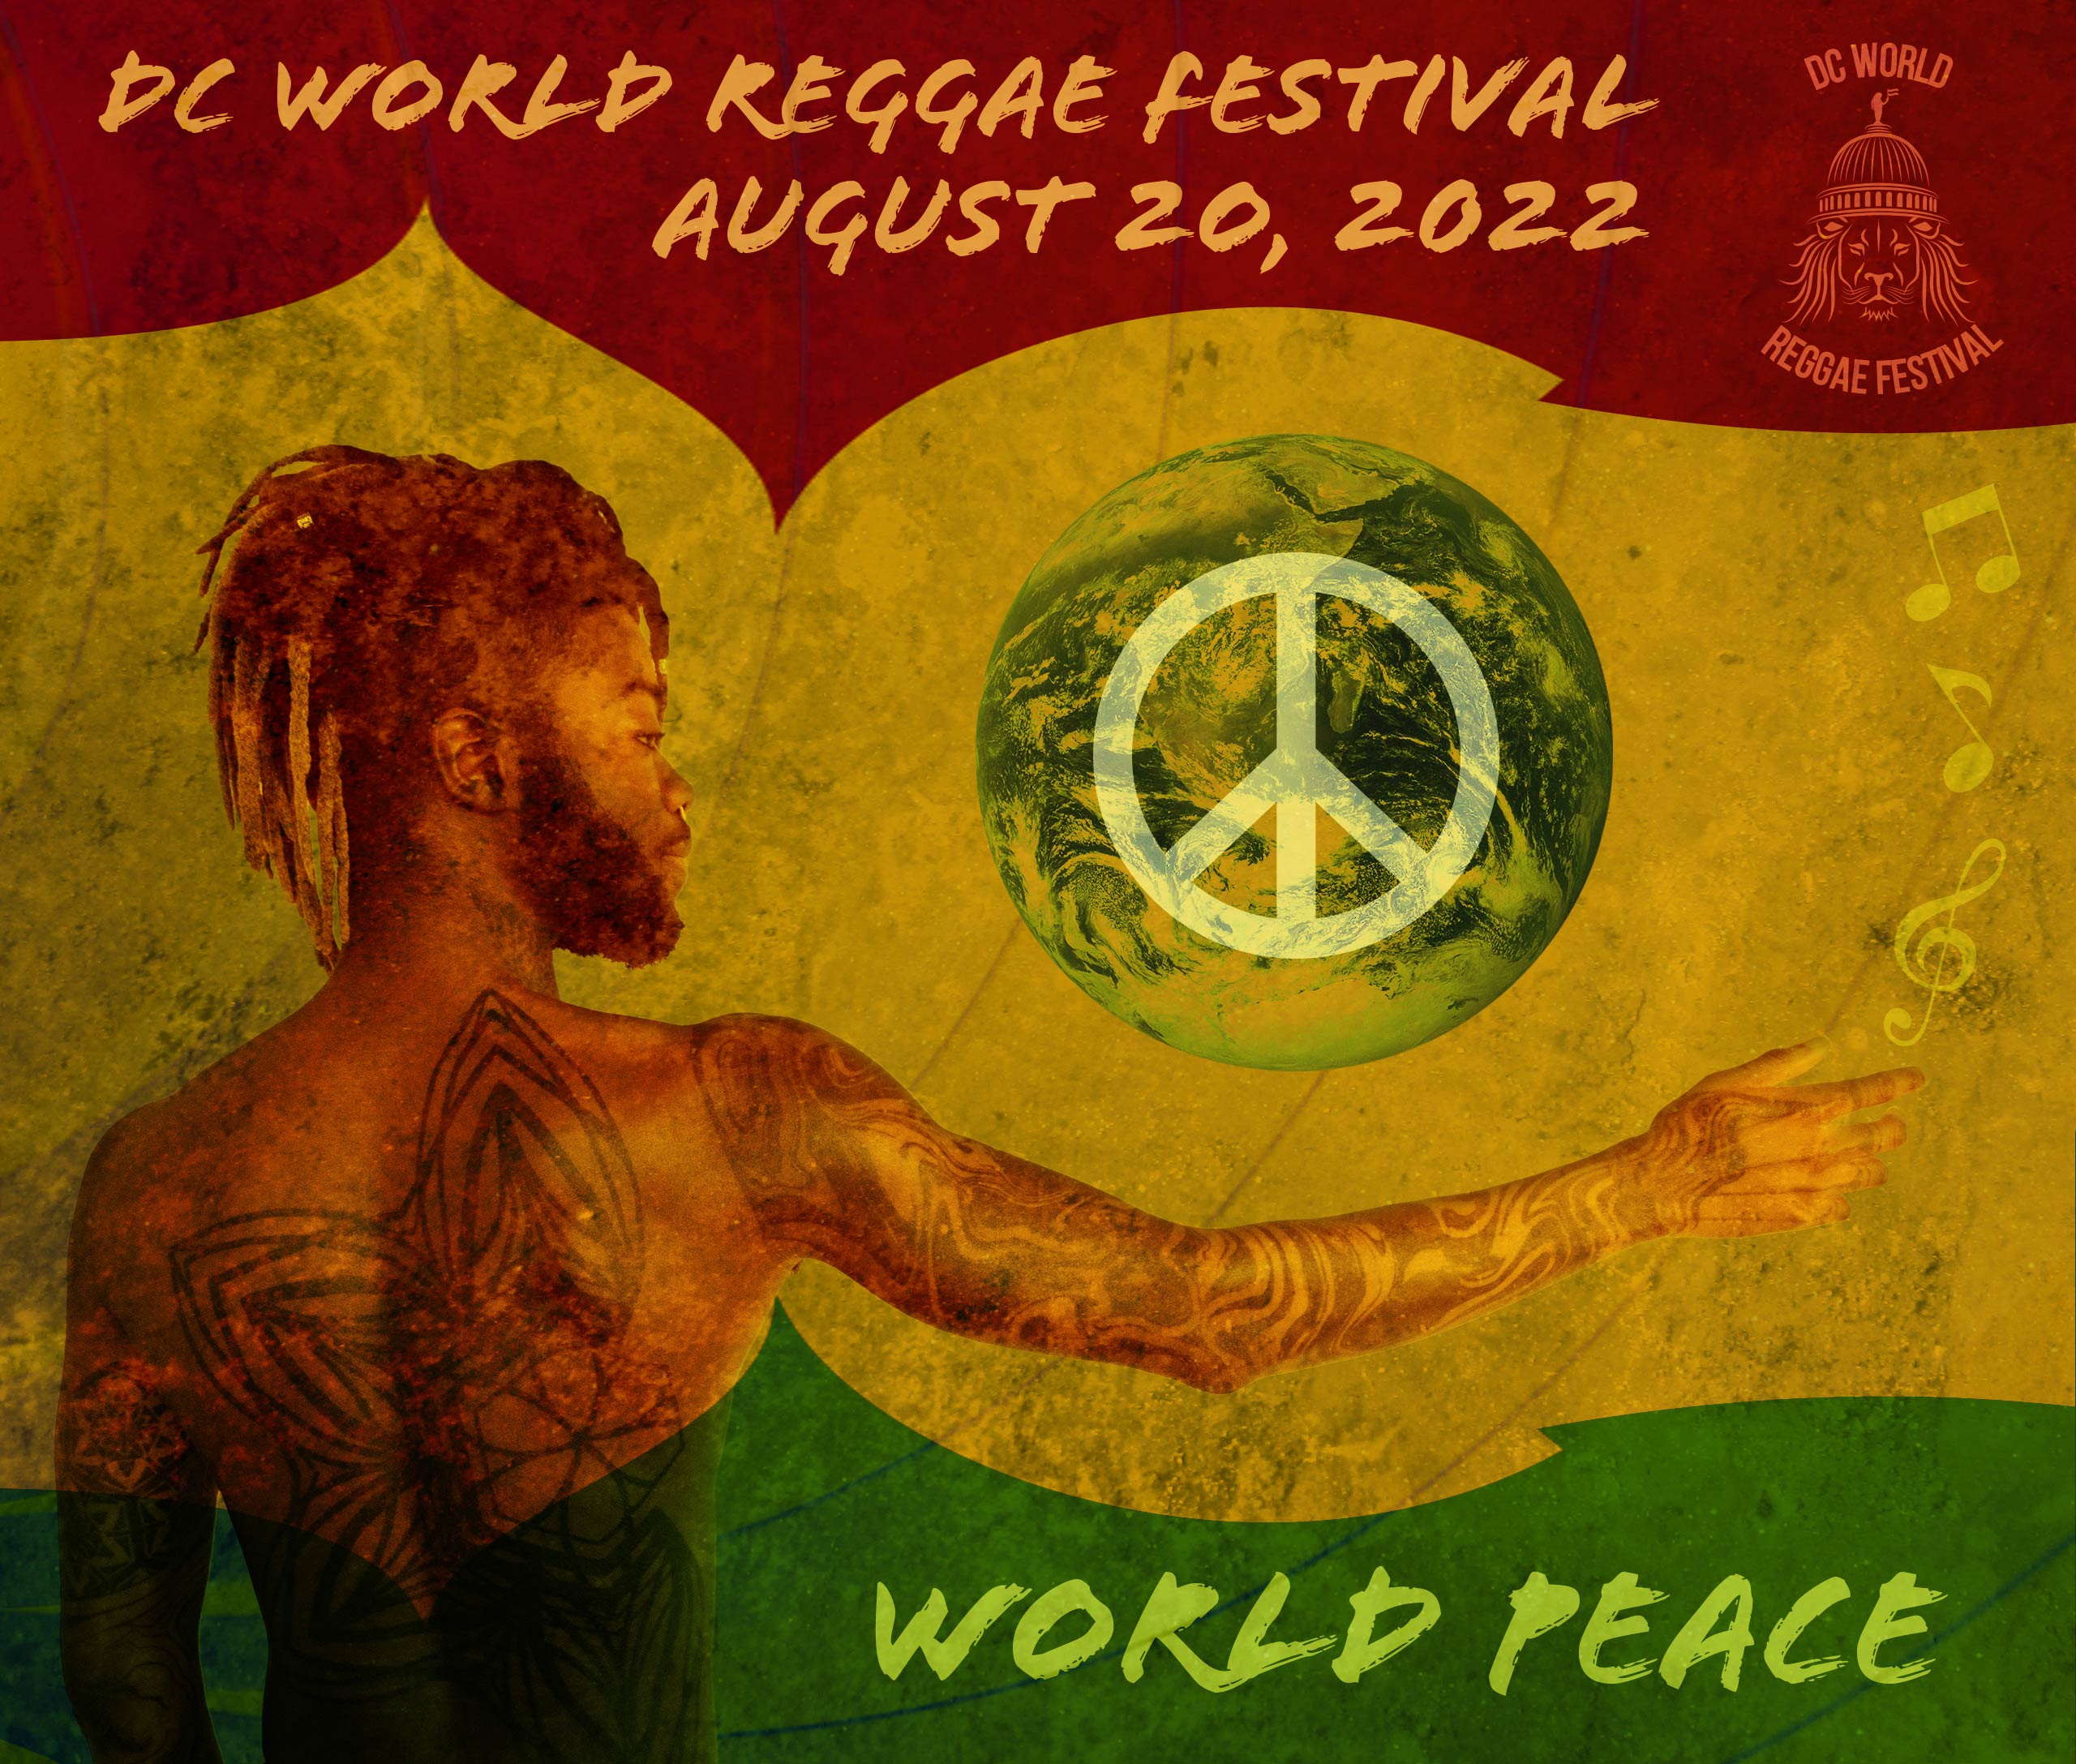 Washington, DC Reggae Music Festival DC World Reggae Festival 2022